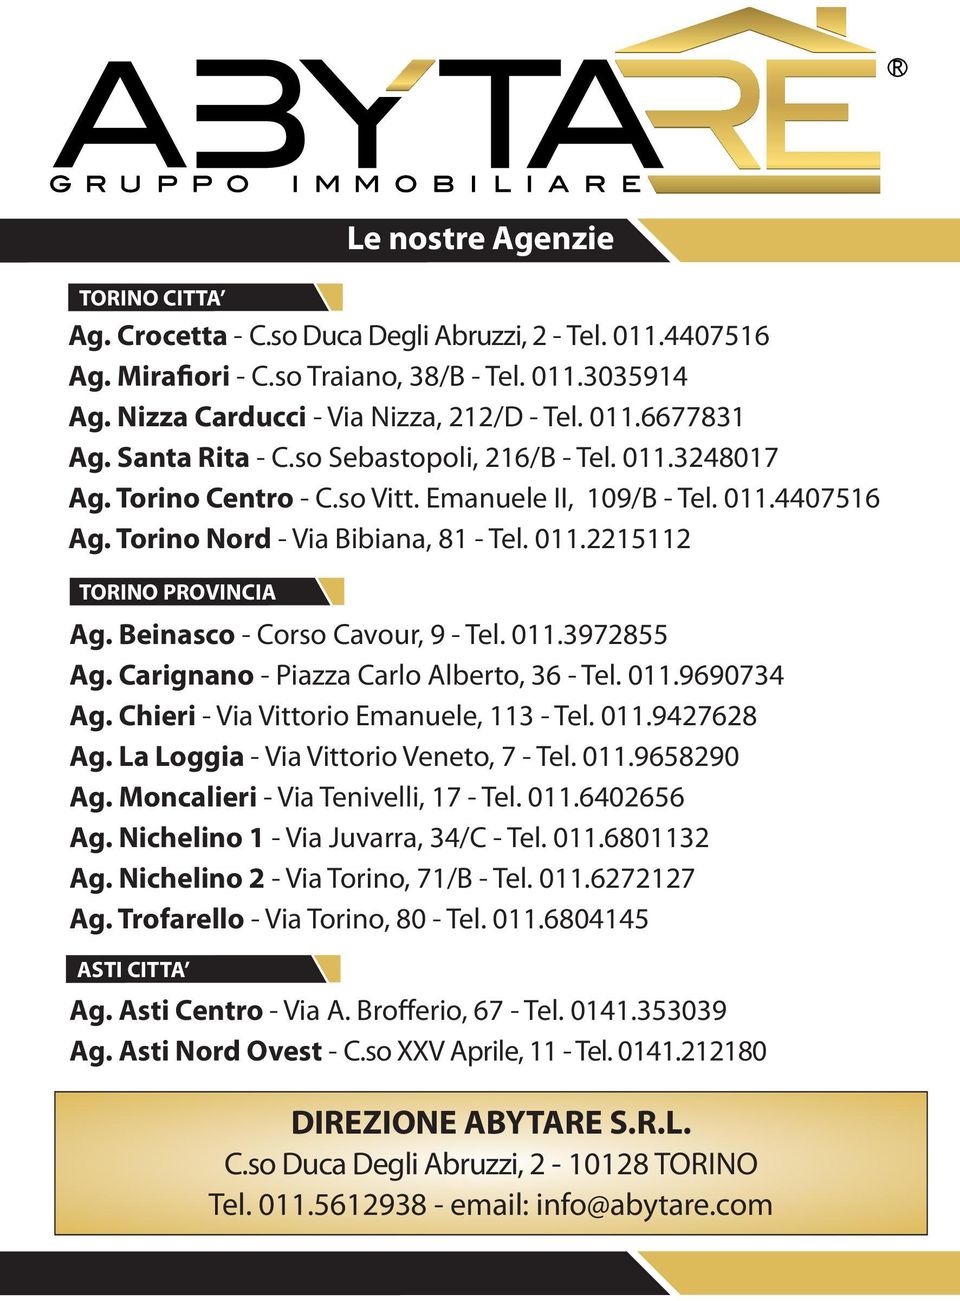 Beinasco - Corso Cavour, 9 - Tel. 011.3972855 Ag. Carignano - Piazza Carlo Alberto, 36 - Tel. 011.9690734 Ag. Chieri - Via Vittorio Emanuele, 113 - Tel. 011.9427628 Ag.